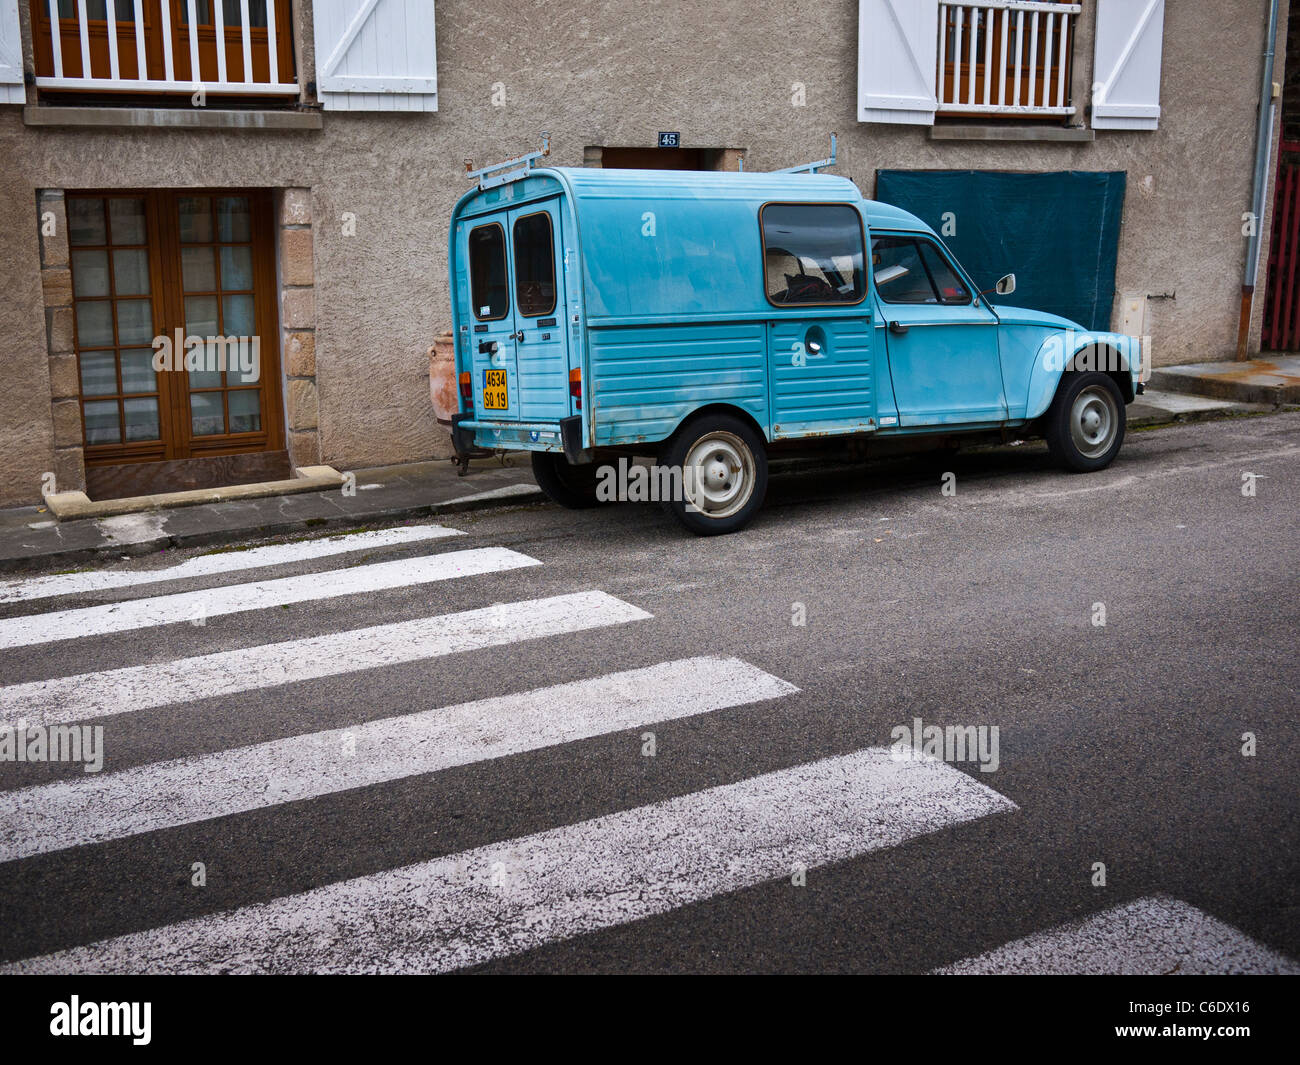 Citroen 2cv van parked by a pedestrian crossing in France Stock Photo